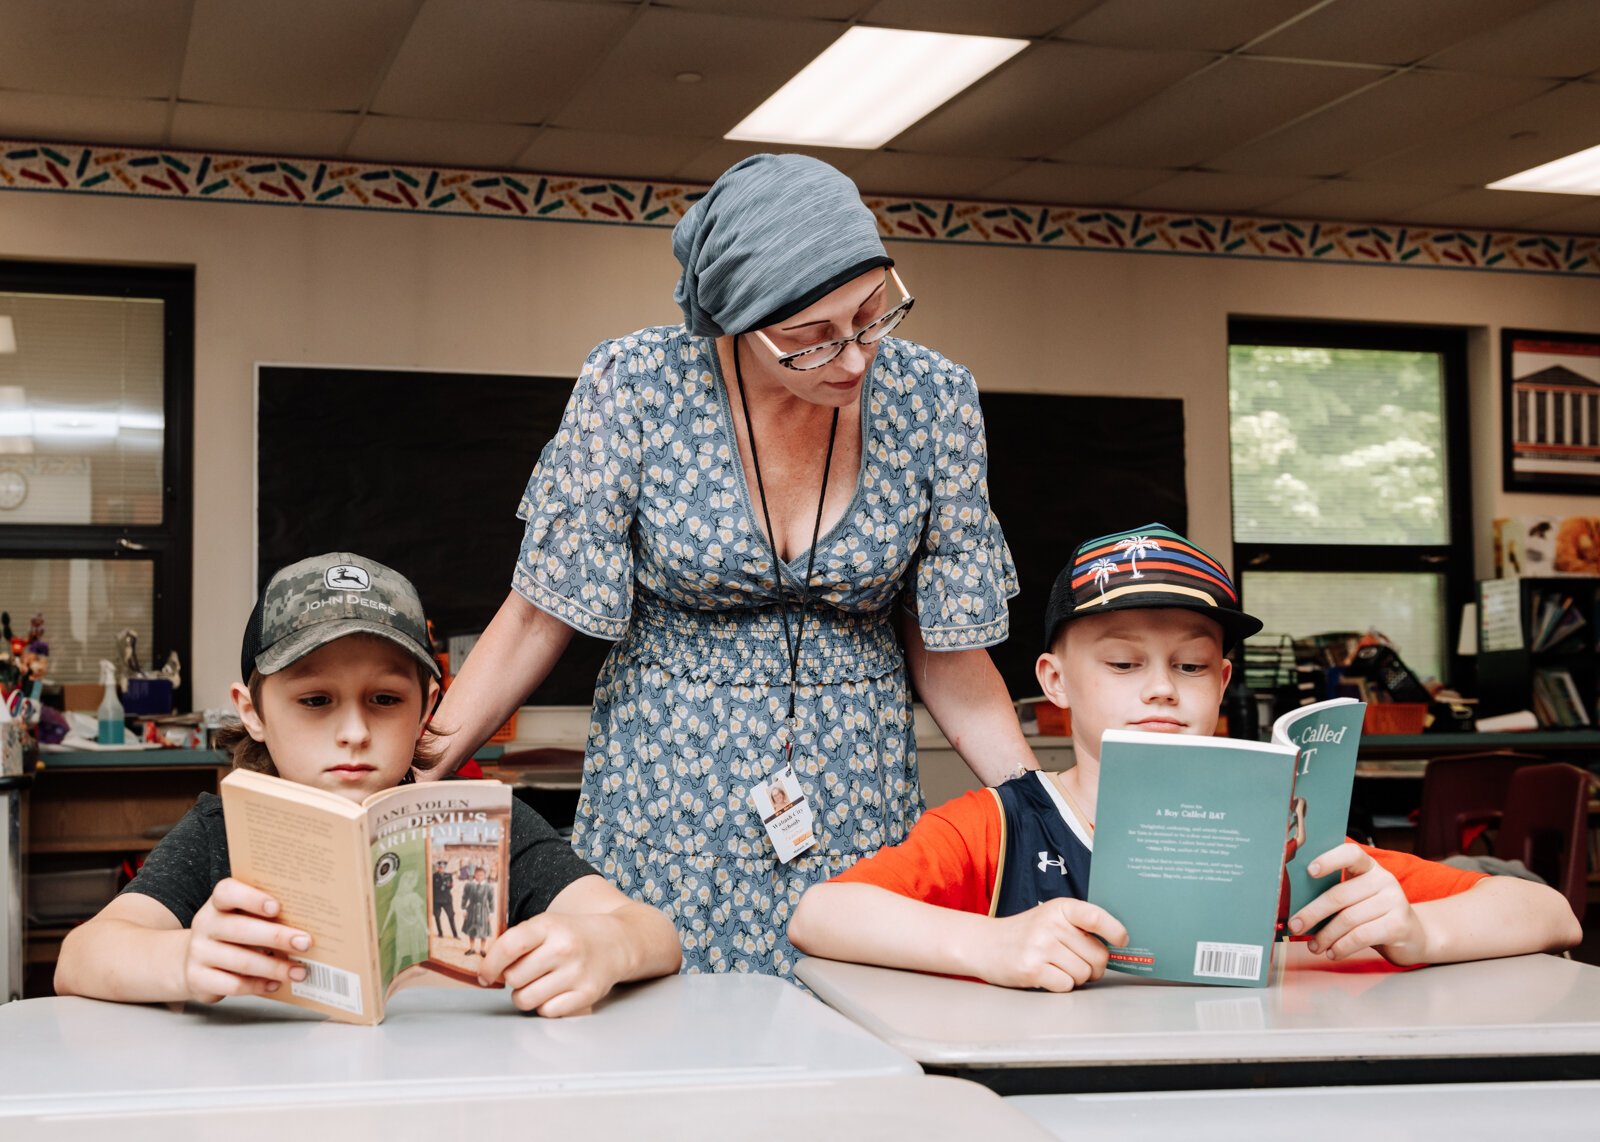 Keri Mertz helps students Jaydenn Mertz (her son), left, and Camden McKee with their books in her classroom at O J Neighbours Elementary School in Wabash.